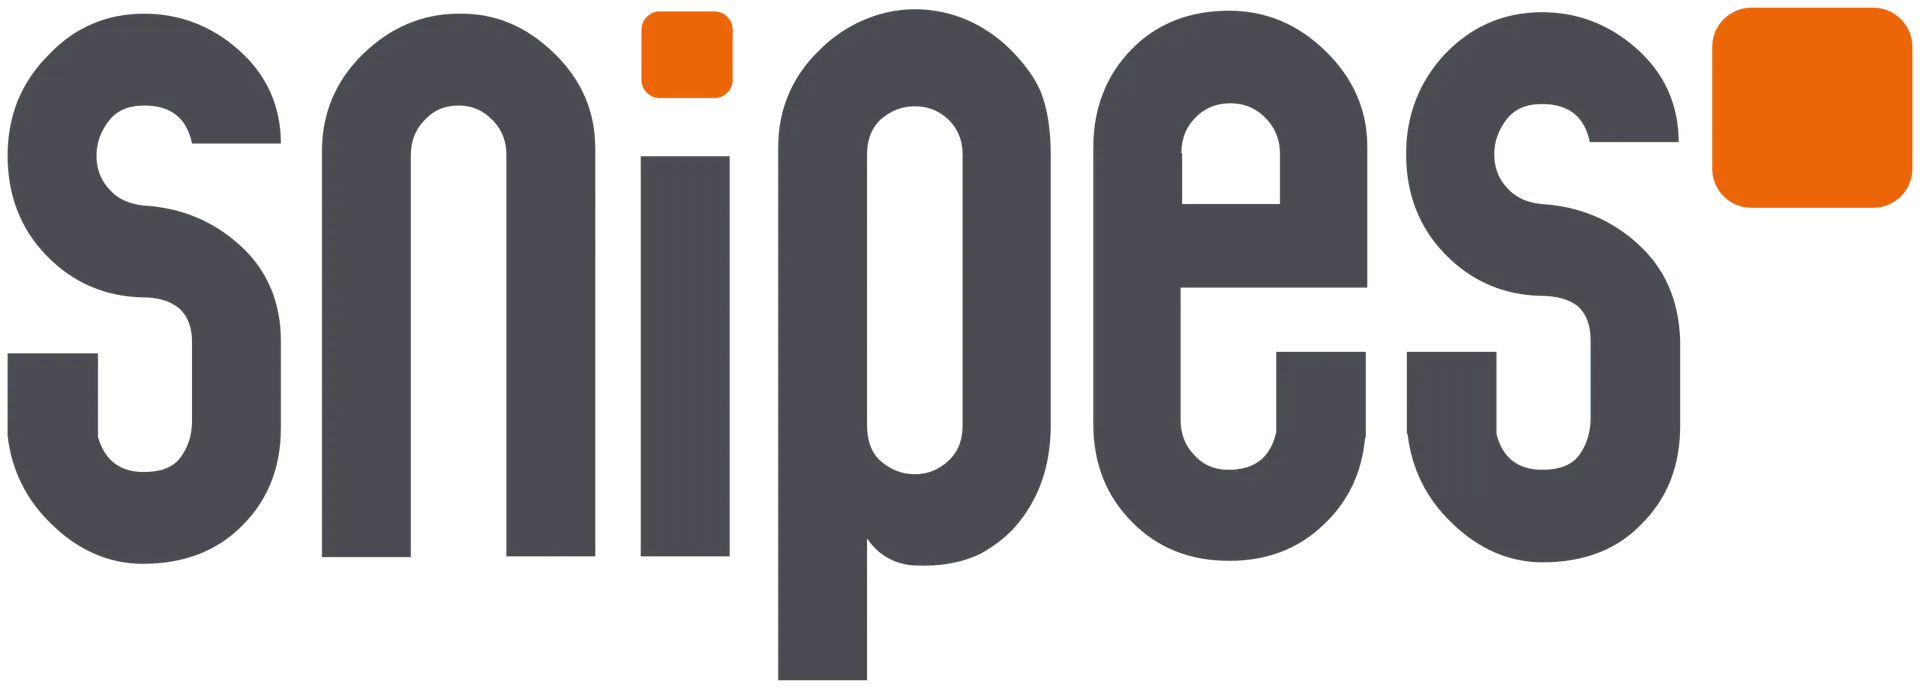 SNIPES logo